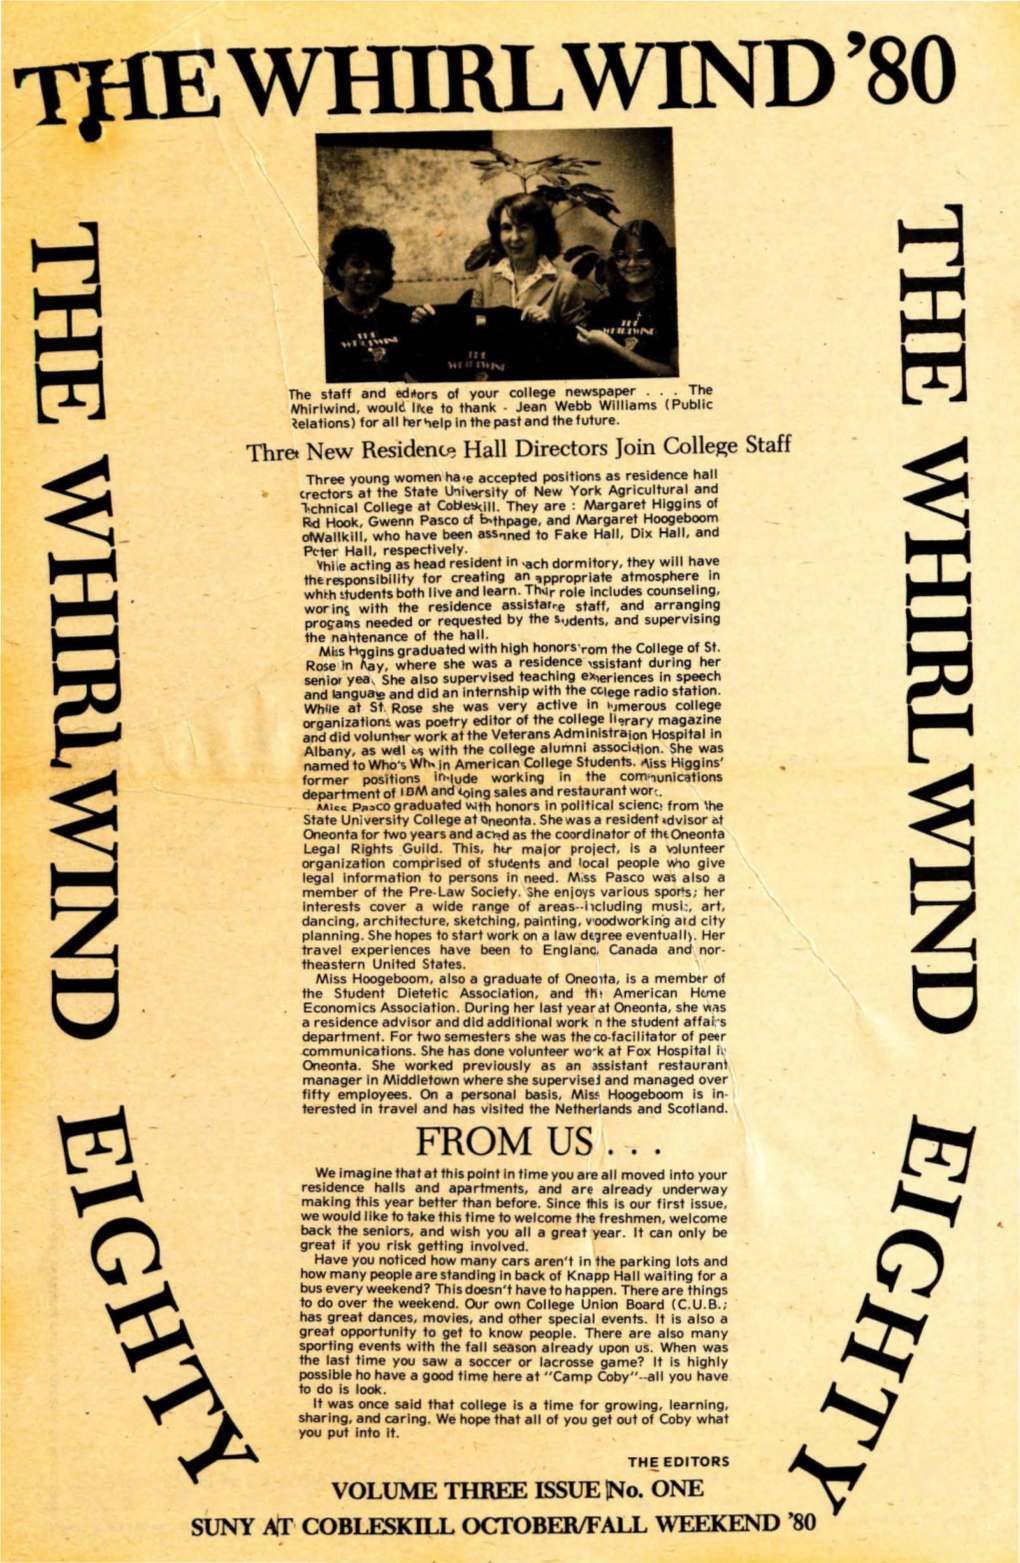 Vol. 3 Issue 1 October 2, 1978 (5.281Mb)